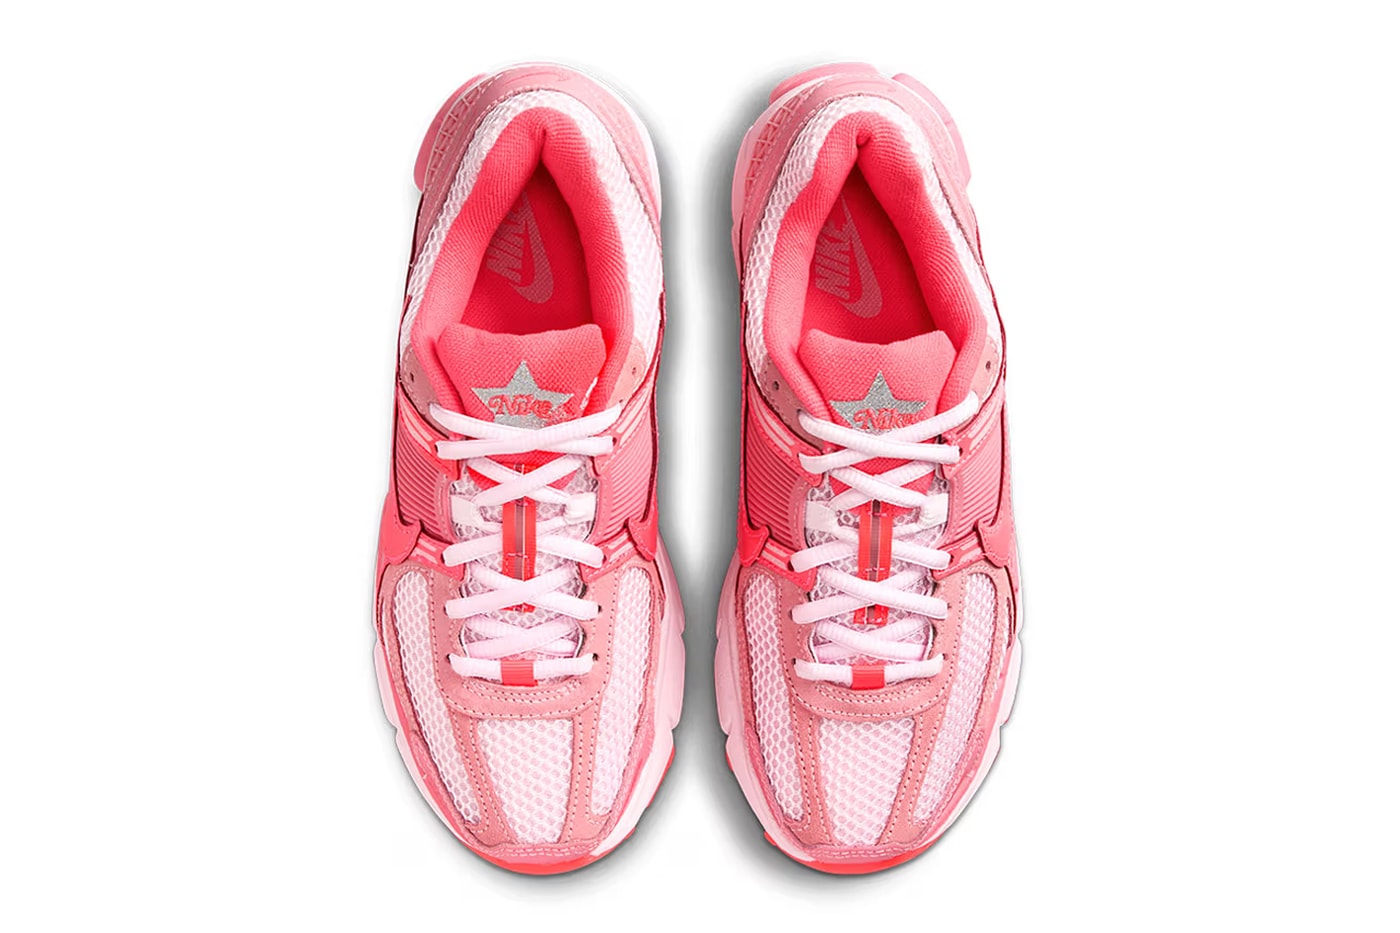 nike zoom sneakers pink red burgundy neon color